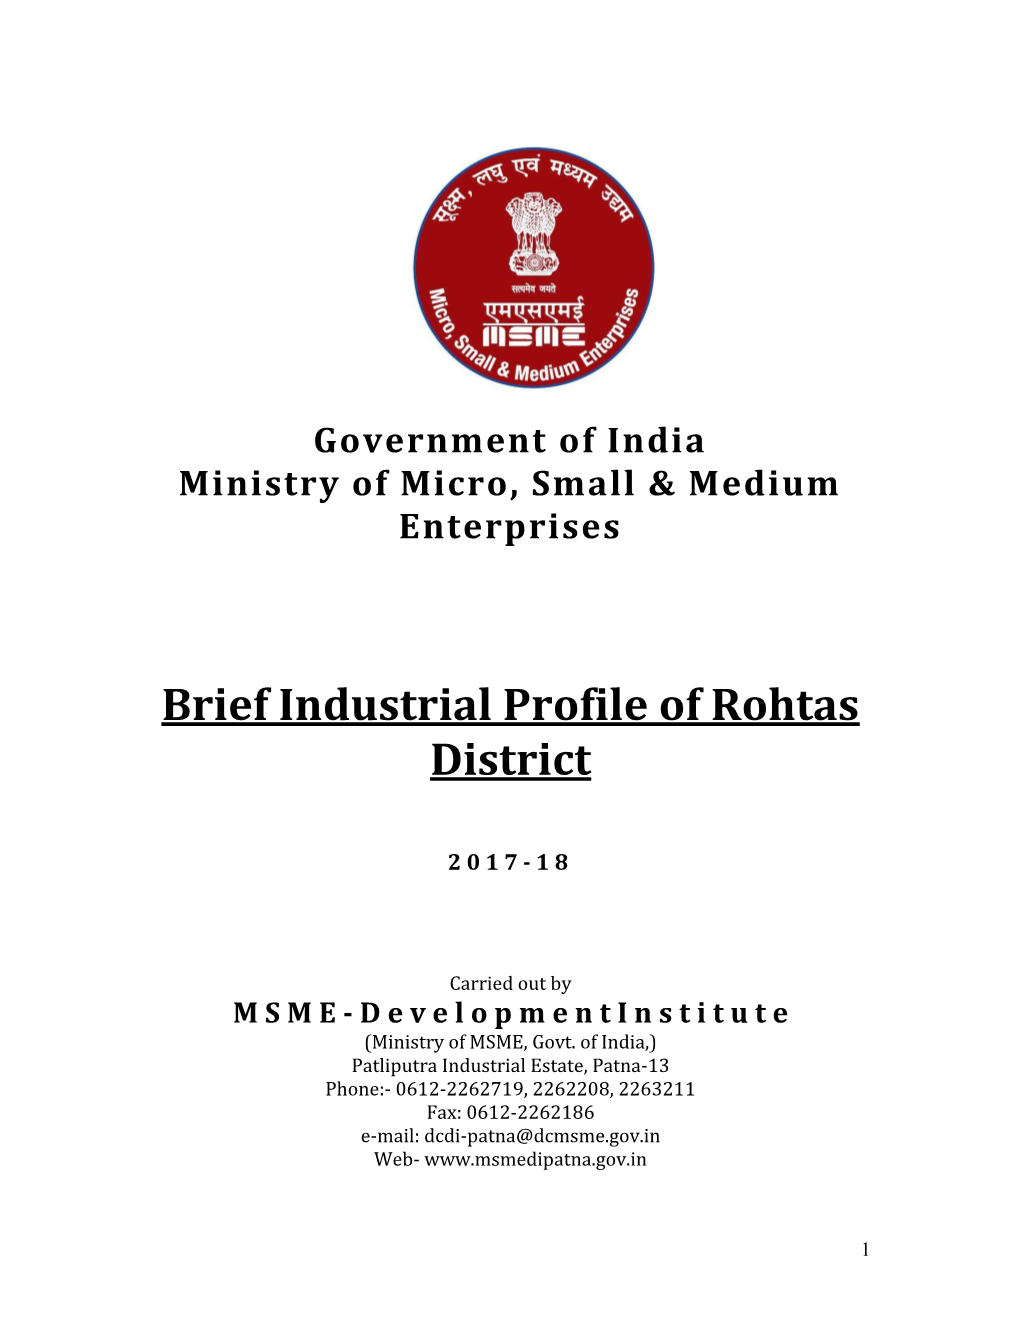 Brief Industrial Profile of Rohtas District